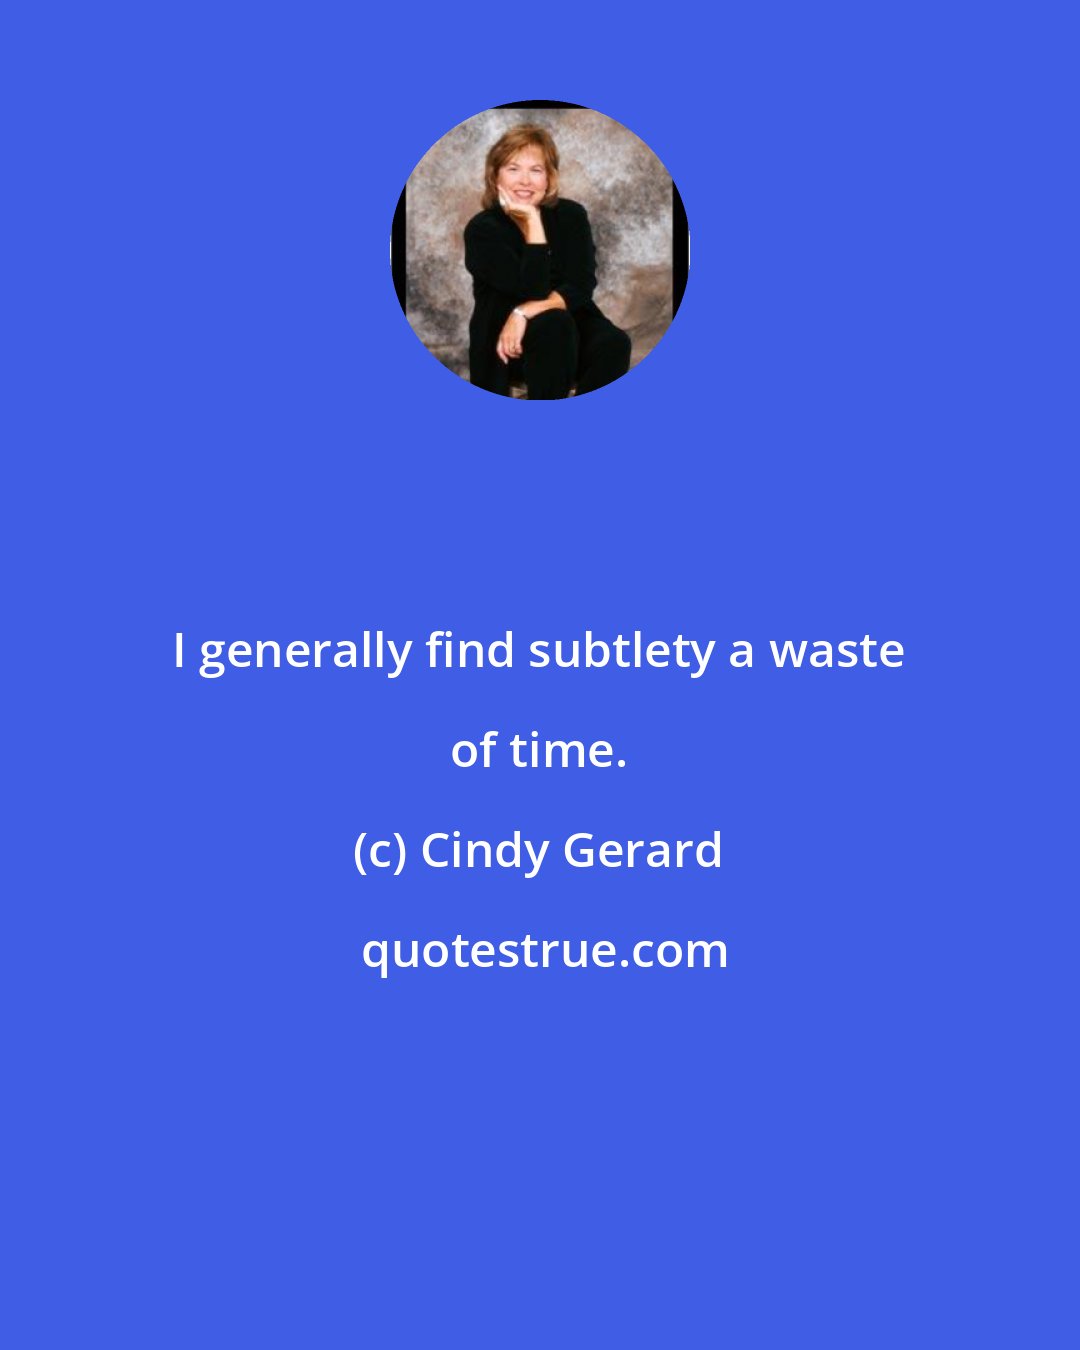 Cindy Gerard: I generally find subtlety a waste of time.